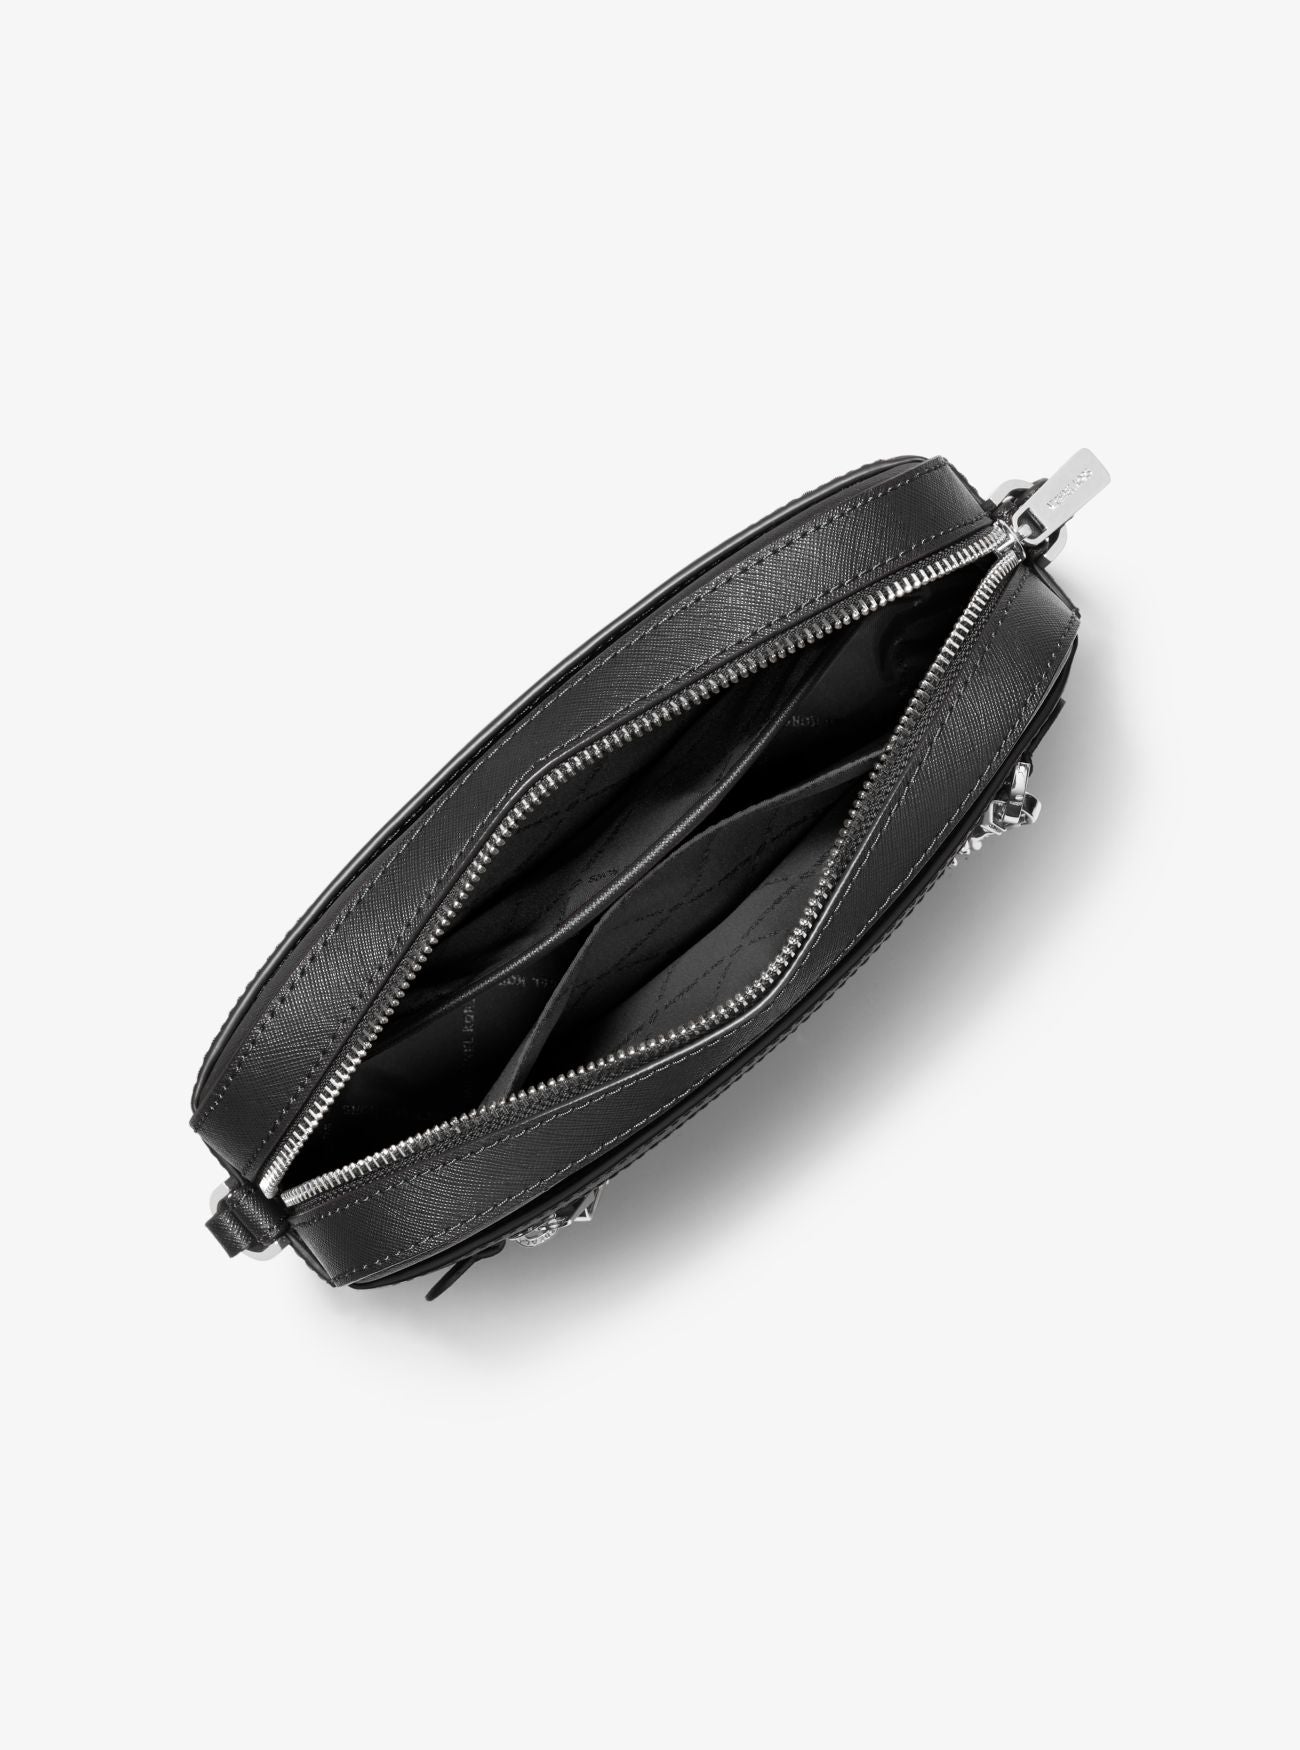 Totes bags Michael Kors - Jet Set large saffiano leather tote